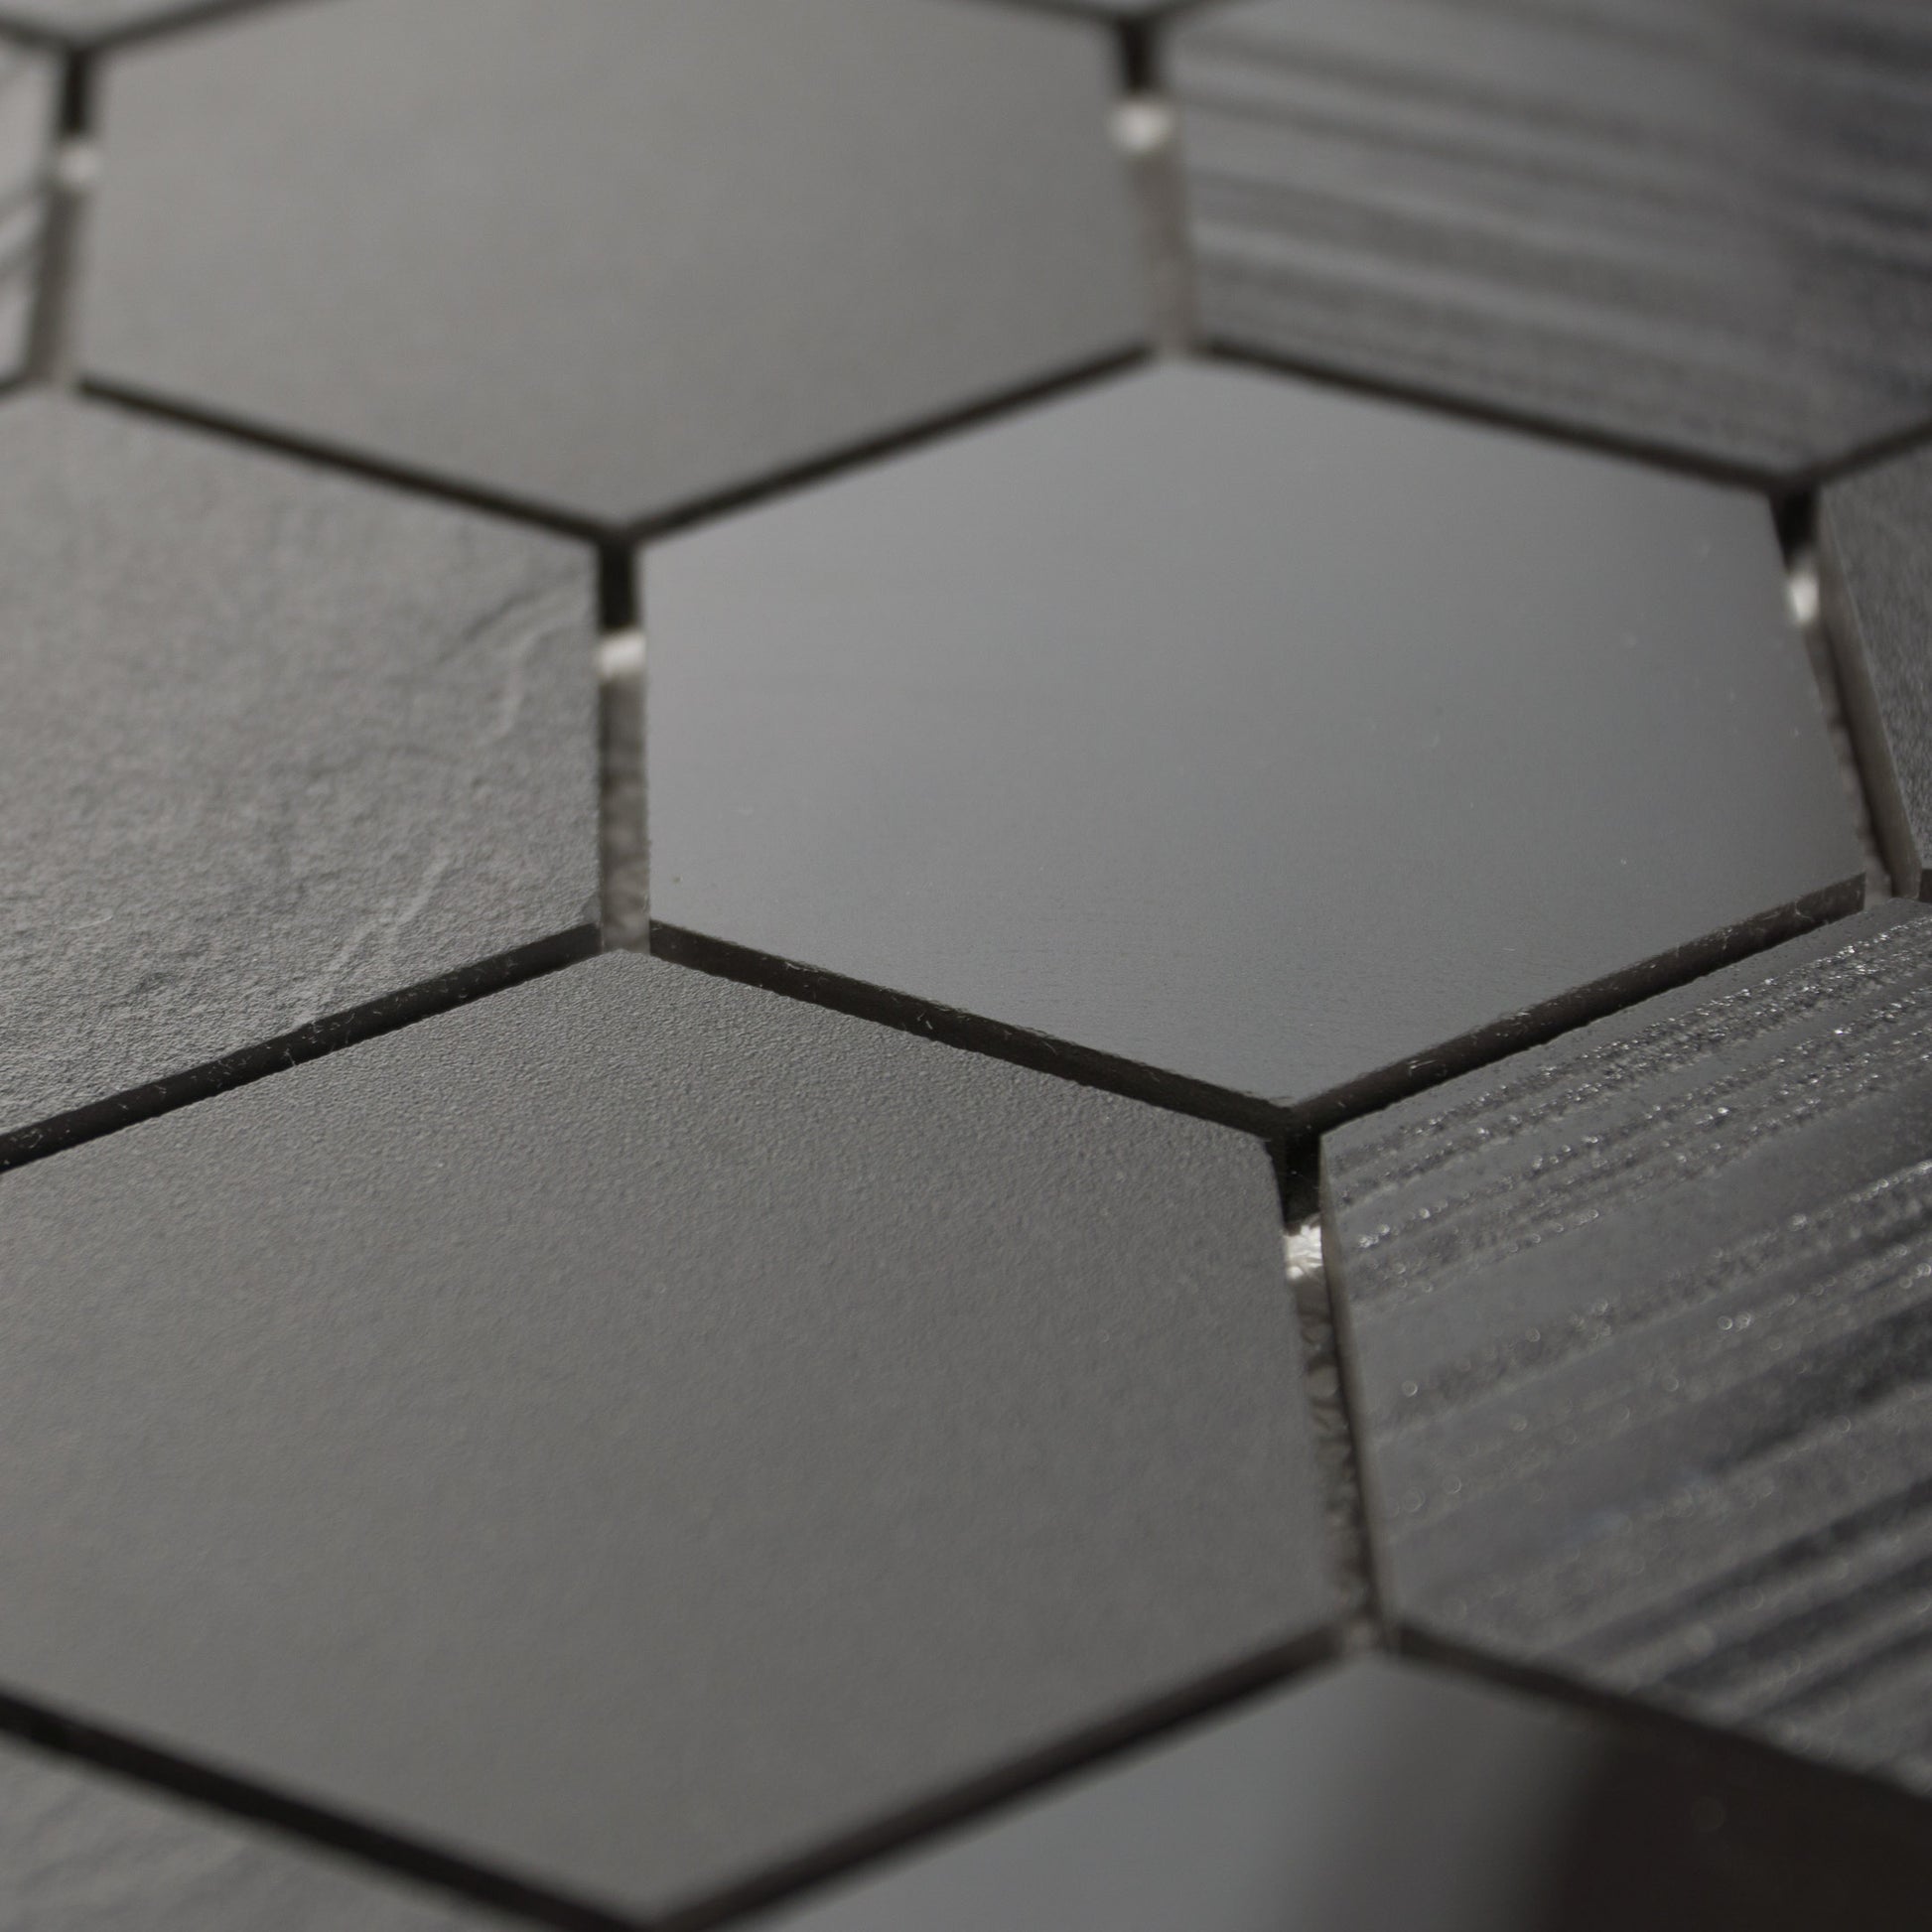 Nano Absolute Black 12 x 24 Matte Porcelain Floor Tile Qube Tiles